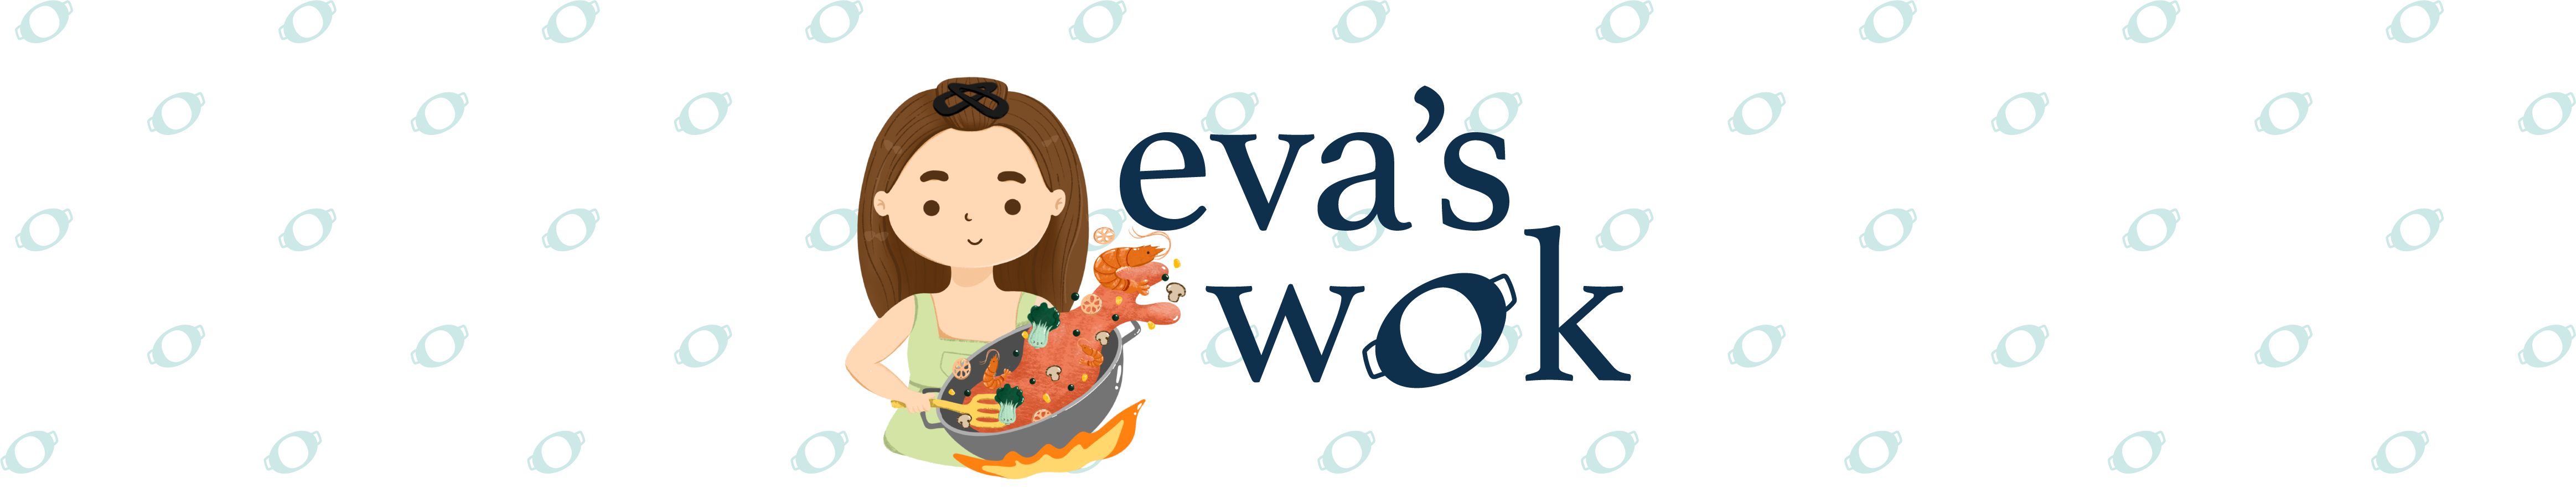 Eva's Wok